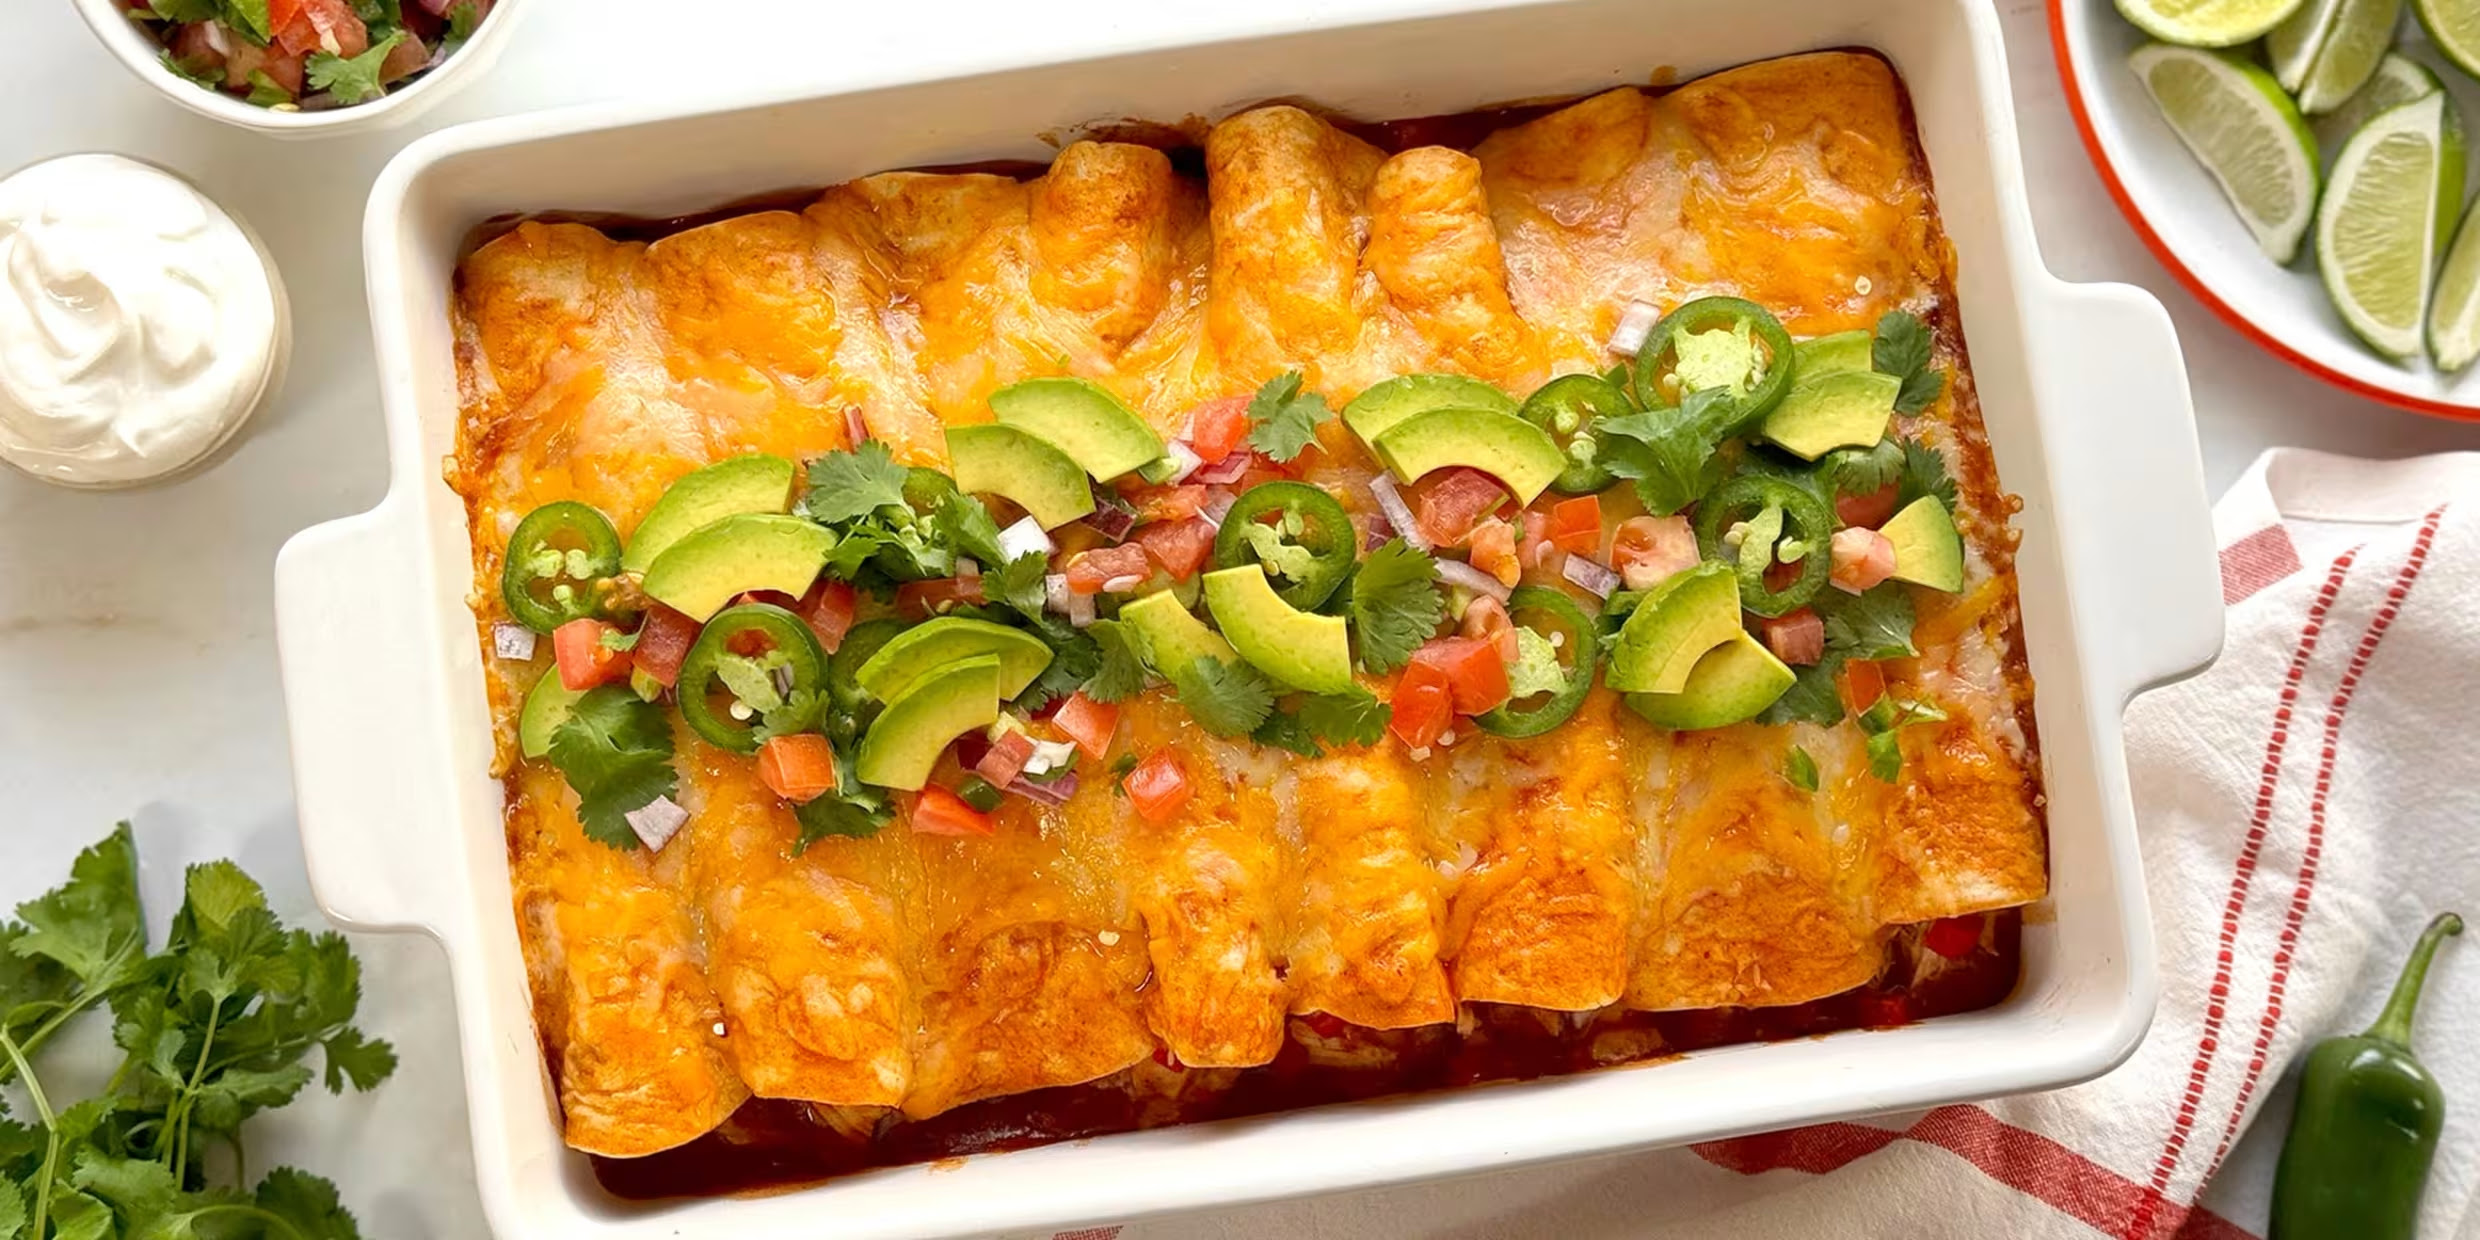 What's for dinner? Make-ahead-chicken-enchiladas-mc-2x1-240422